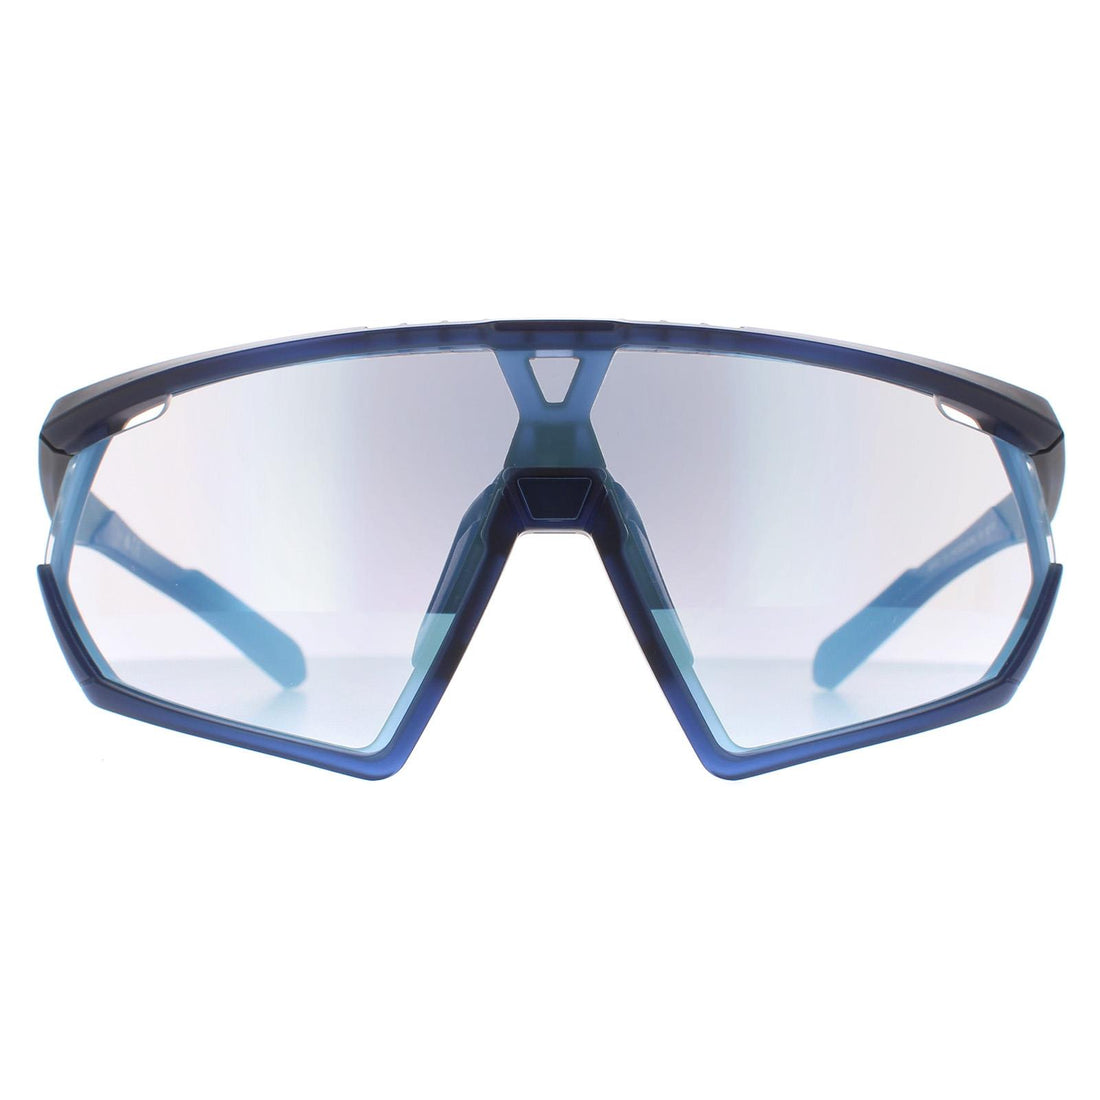 Adidas SP0001 Sunglasses Frosted Dark Blue Vario Azure Mirror Blue